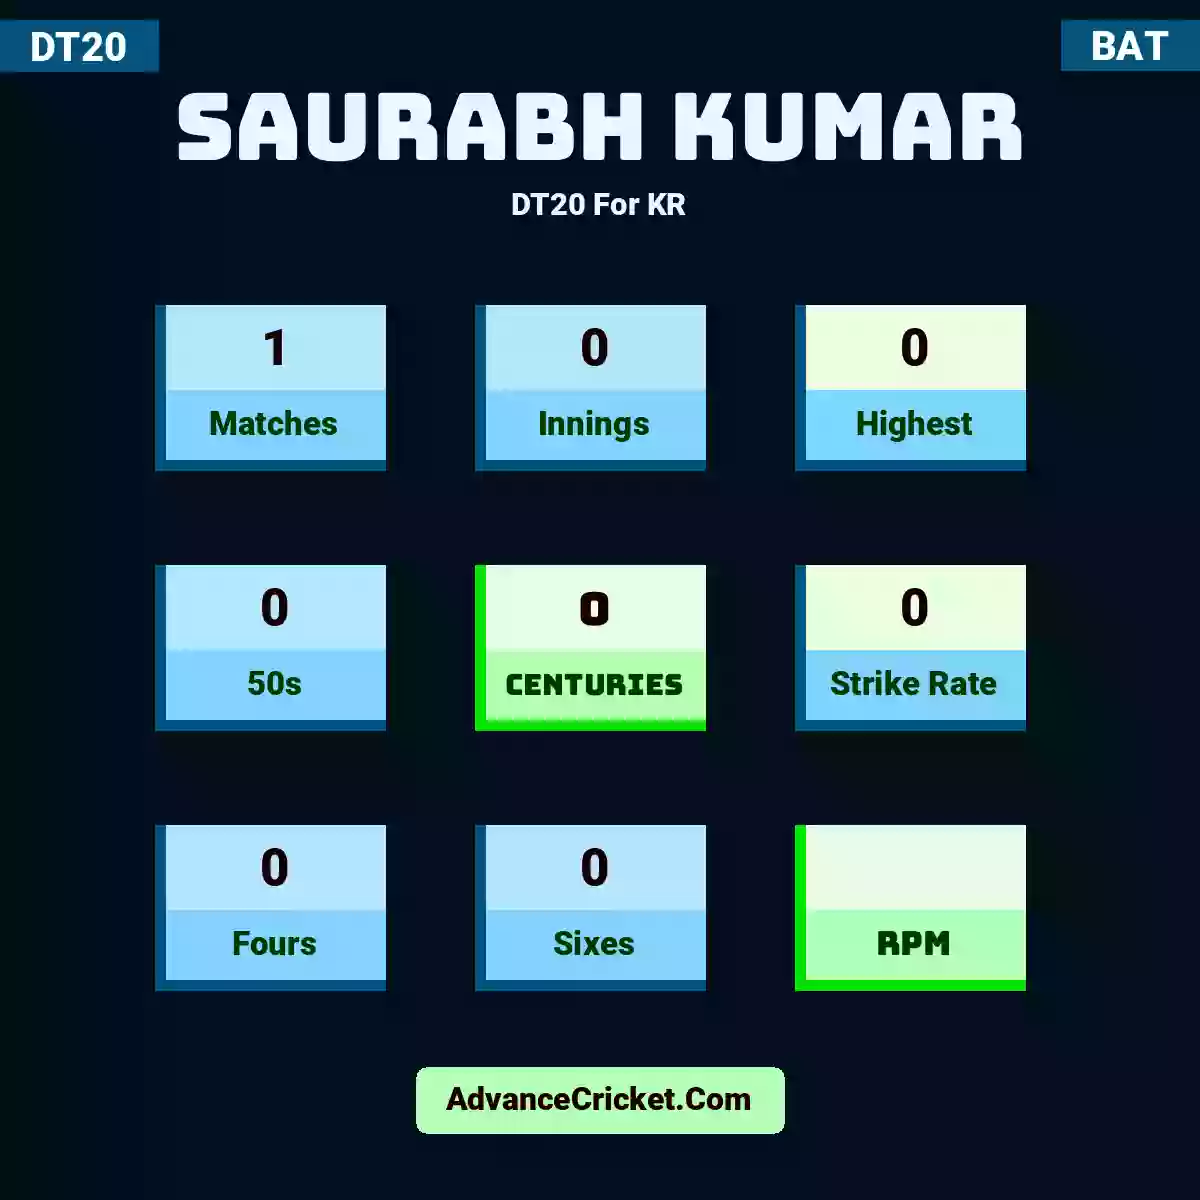 Saurabh Kumar DT20  For KR, Saurabh Kumar played 1 matches, scored 0 runs as highest, 0 half-centuries, and 0 centuries, with a strike rate of 0. S.Kumar hit 0 fours and 0 sixes.